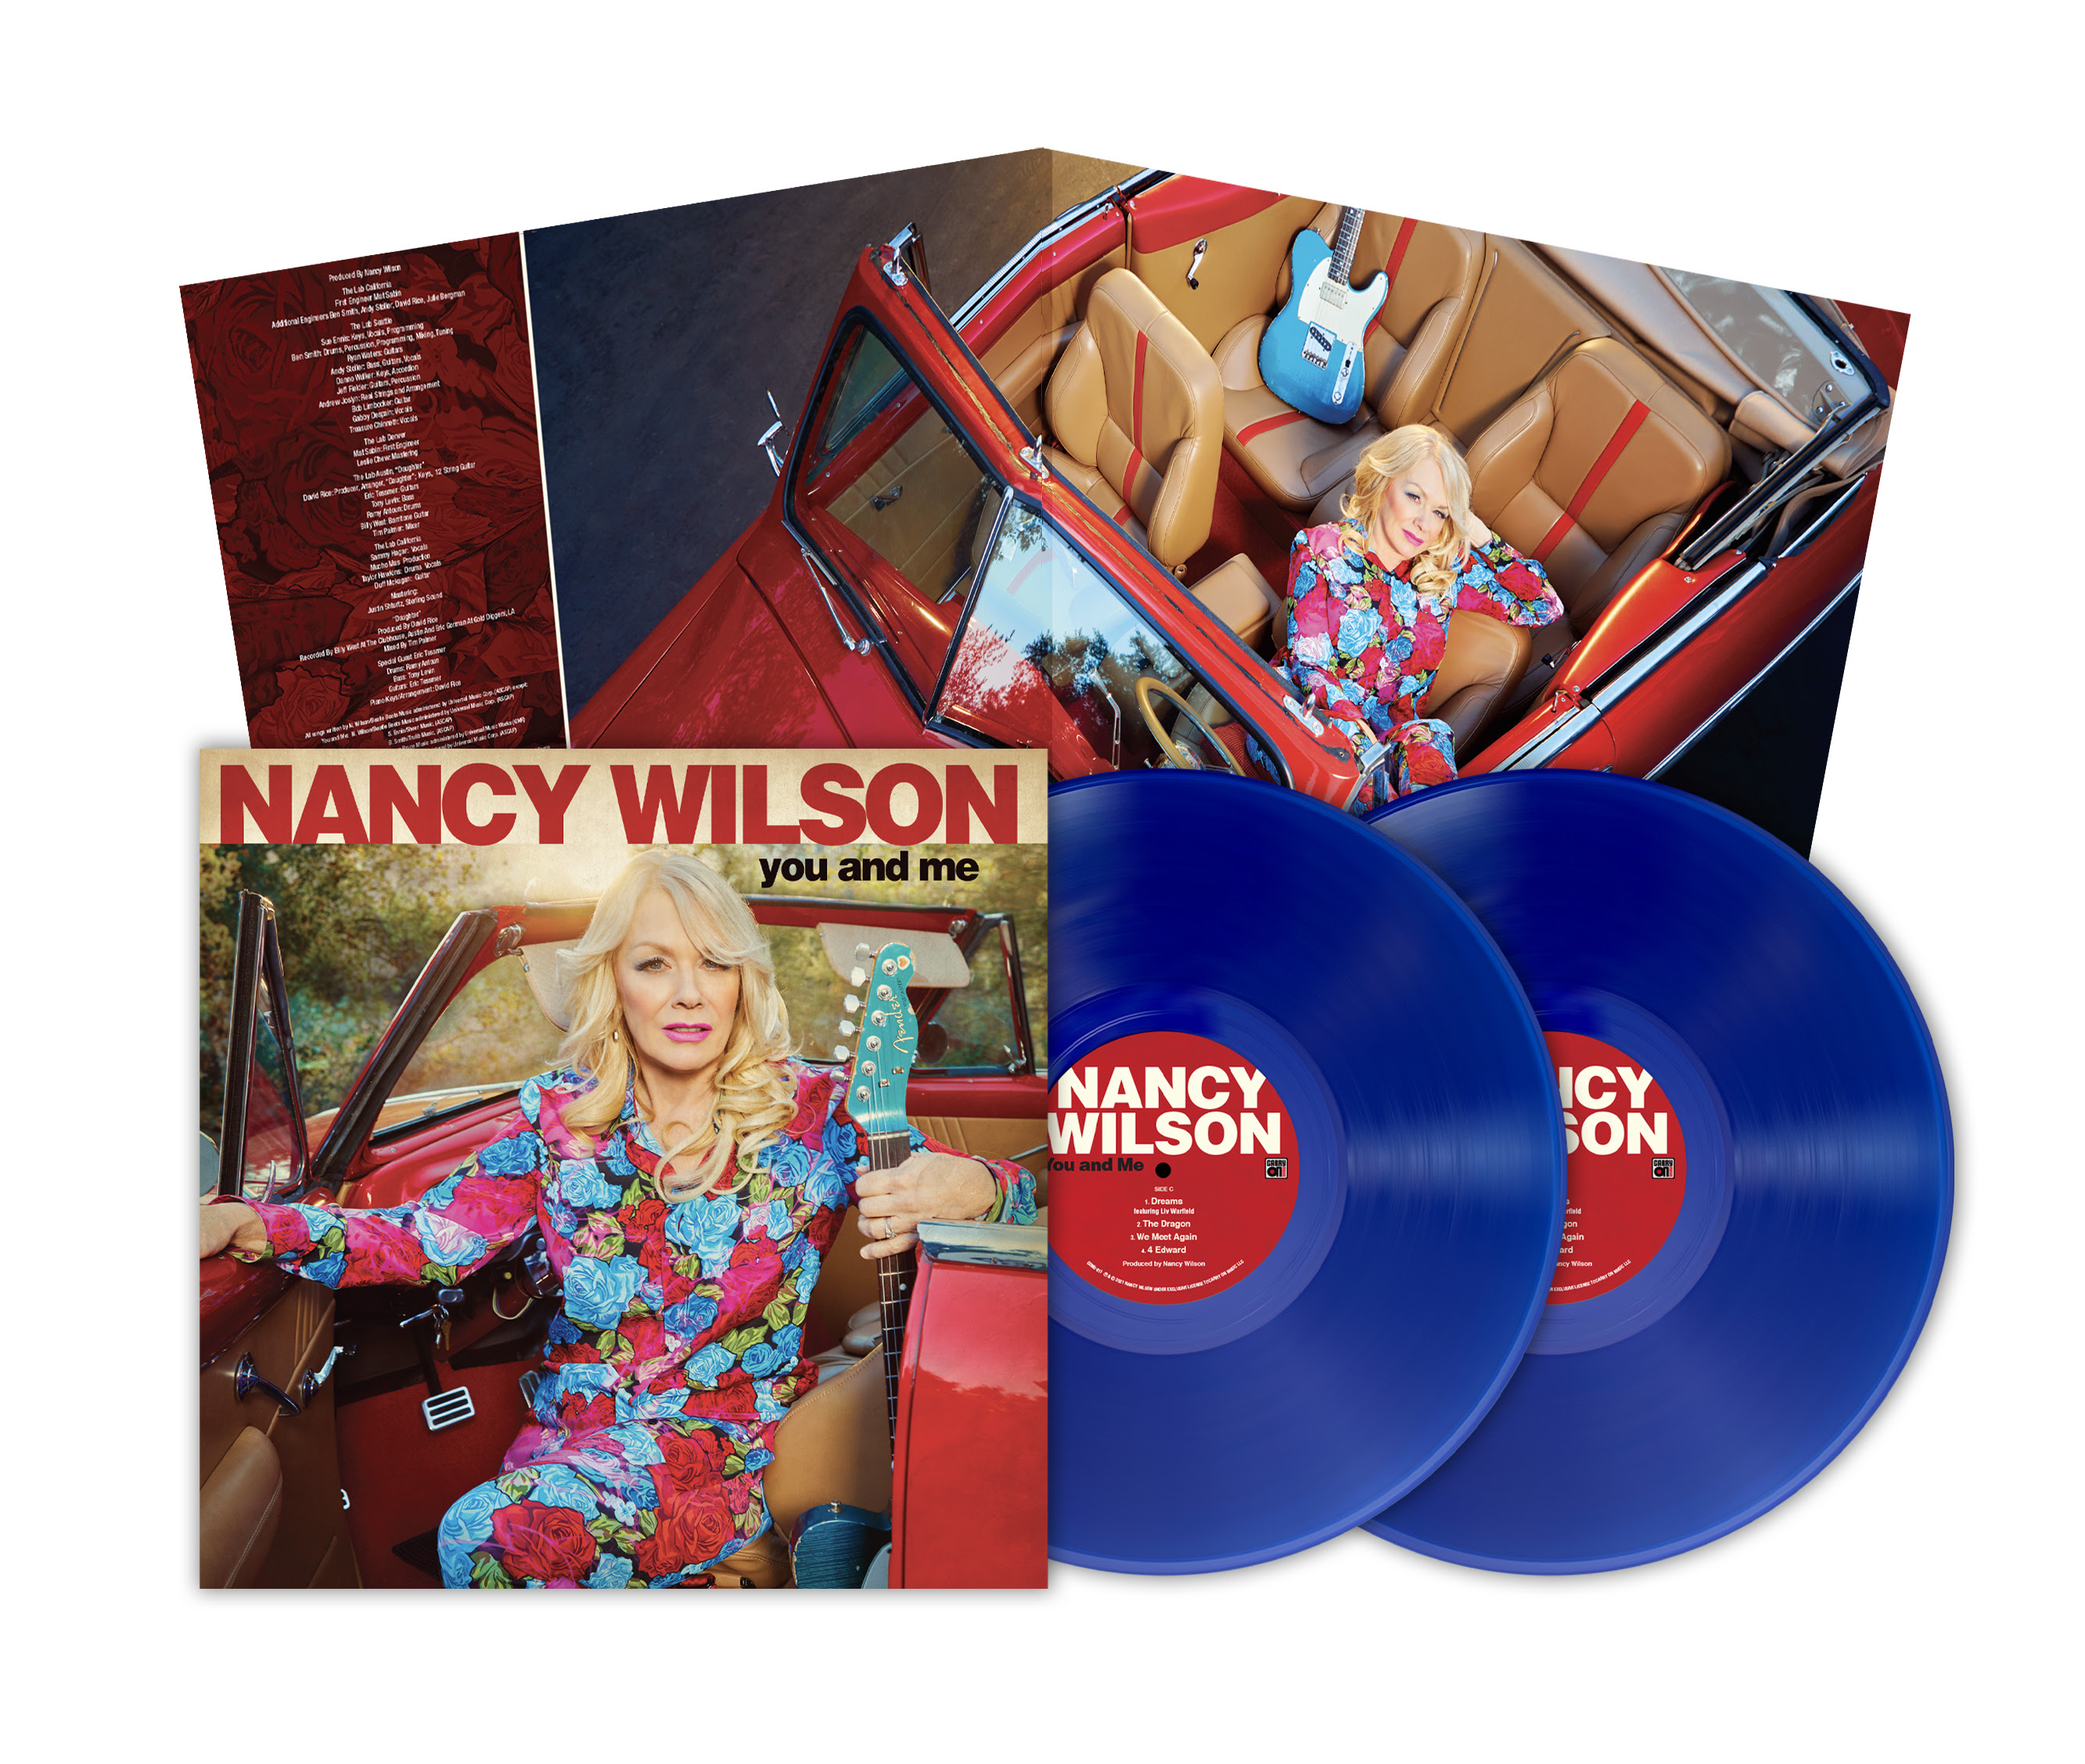 Heart's NANCY WILSON Announces RSD Black Friday Release